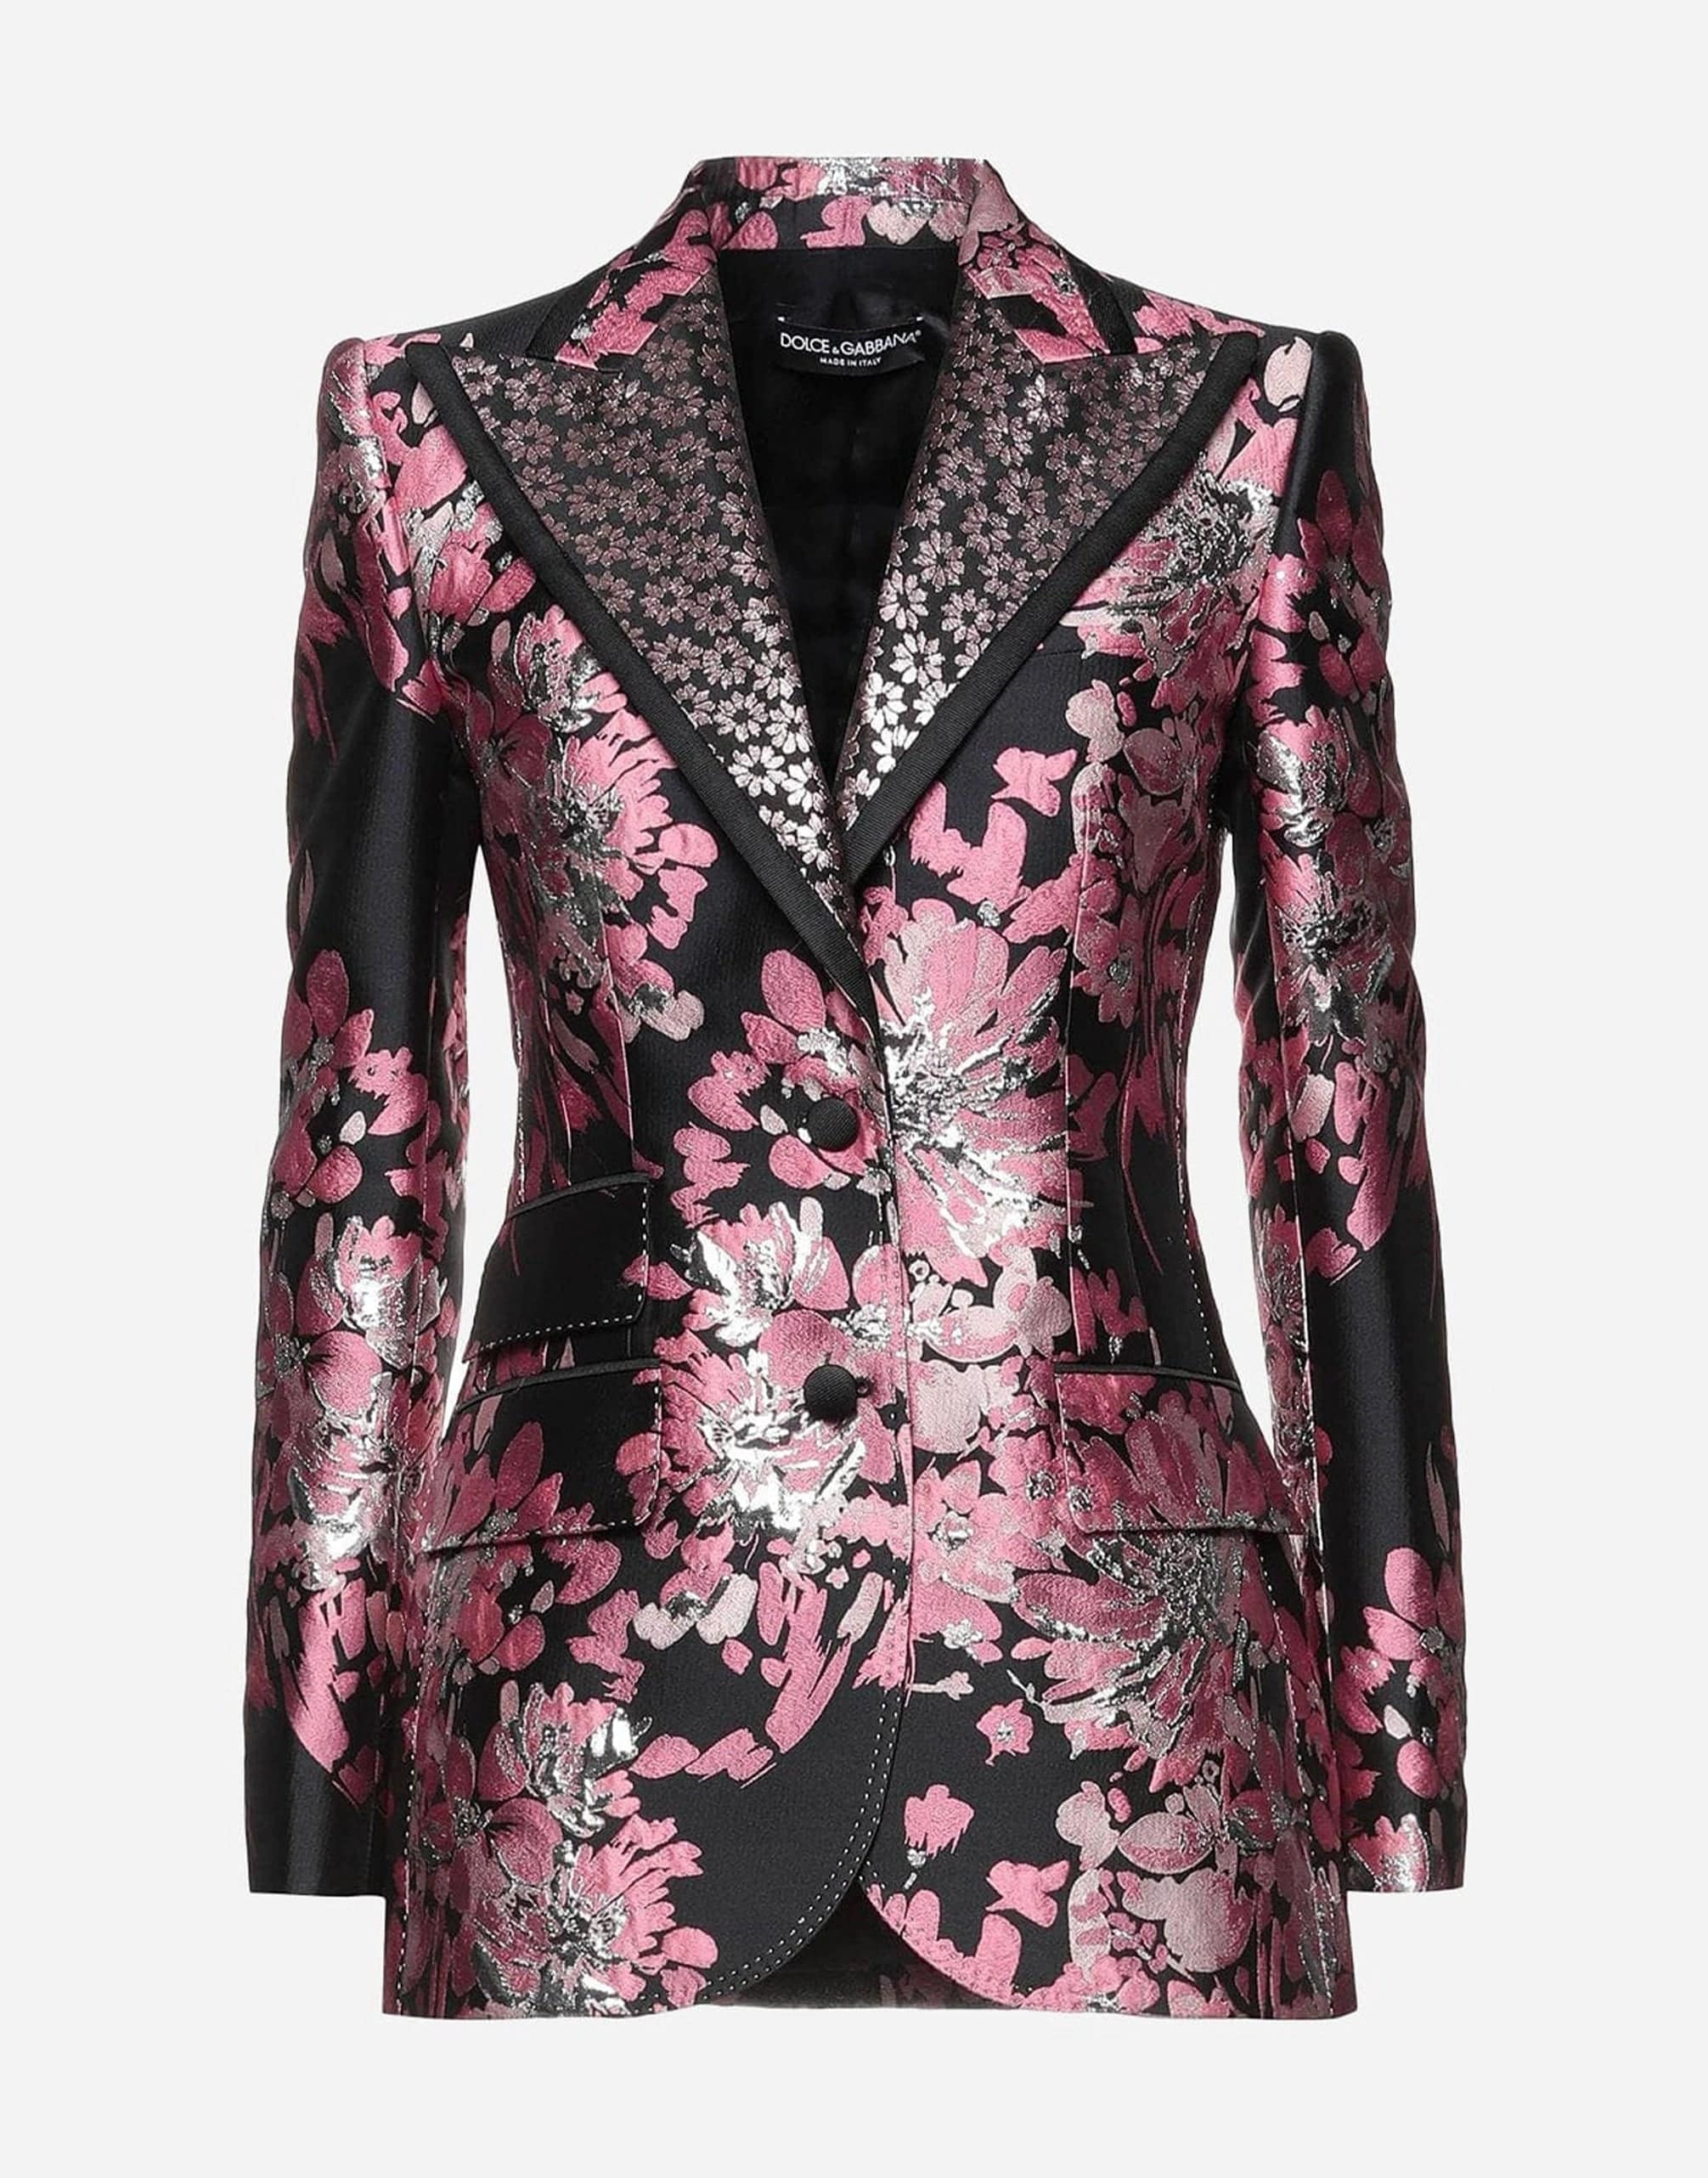 Dolce & Gabbana Floral Jacquard Jacket